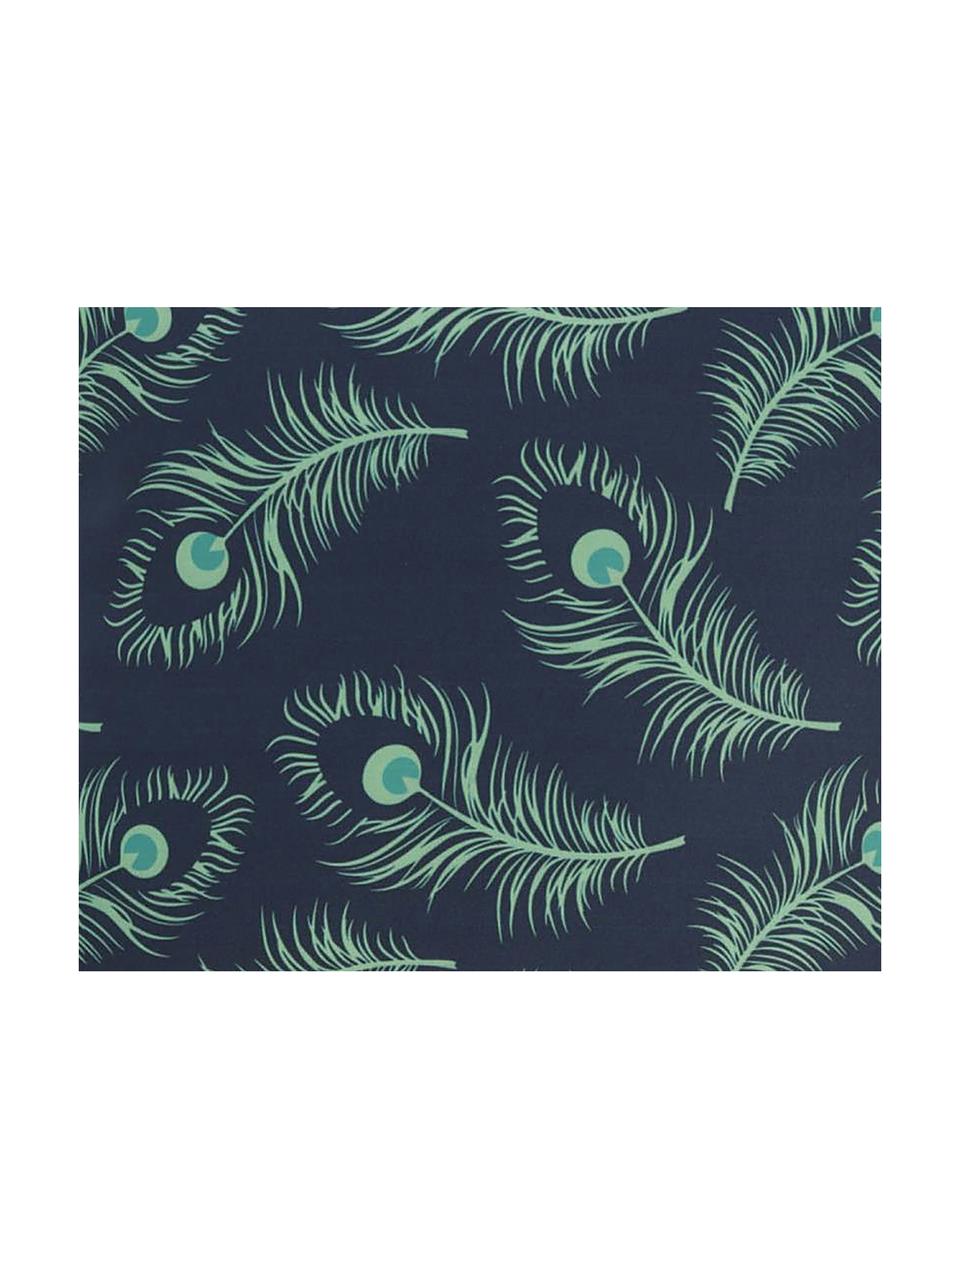 Kissenhülle Ekene mit Pfauenfedern Motiv, 100% Polyester, Dunkelblau, Grüntöne, 45 x 45 cm